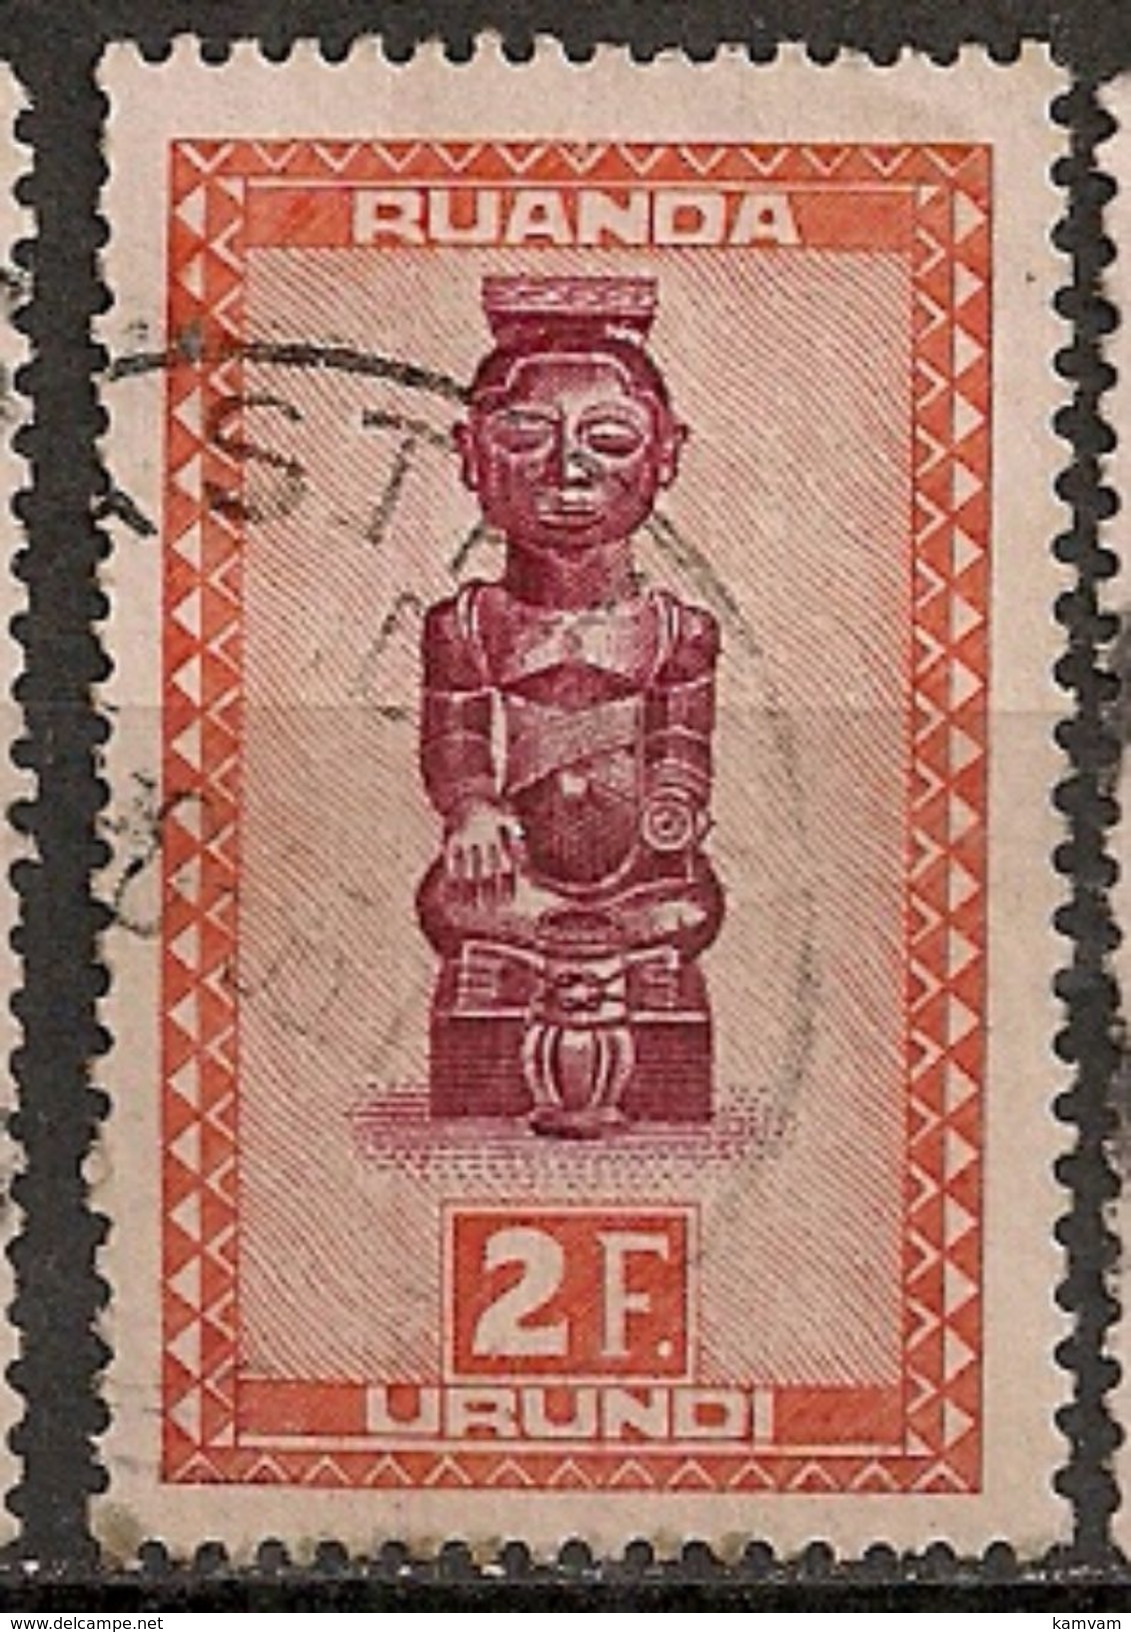 CONGO RUANDA URUNDI 164 ASTRIDA - Used Stamps